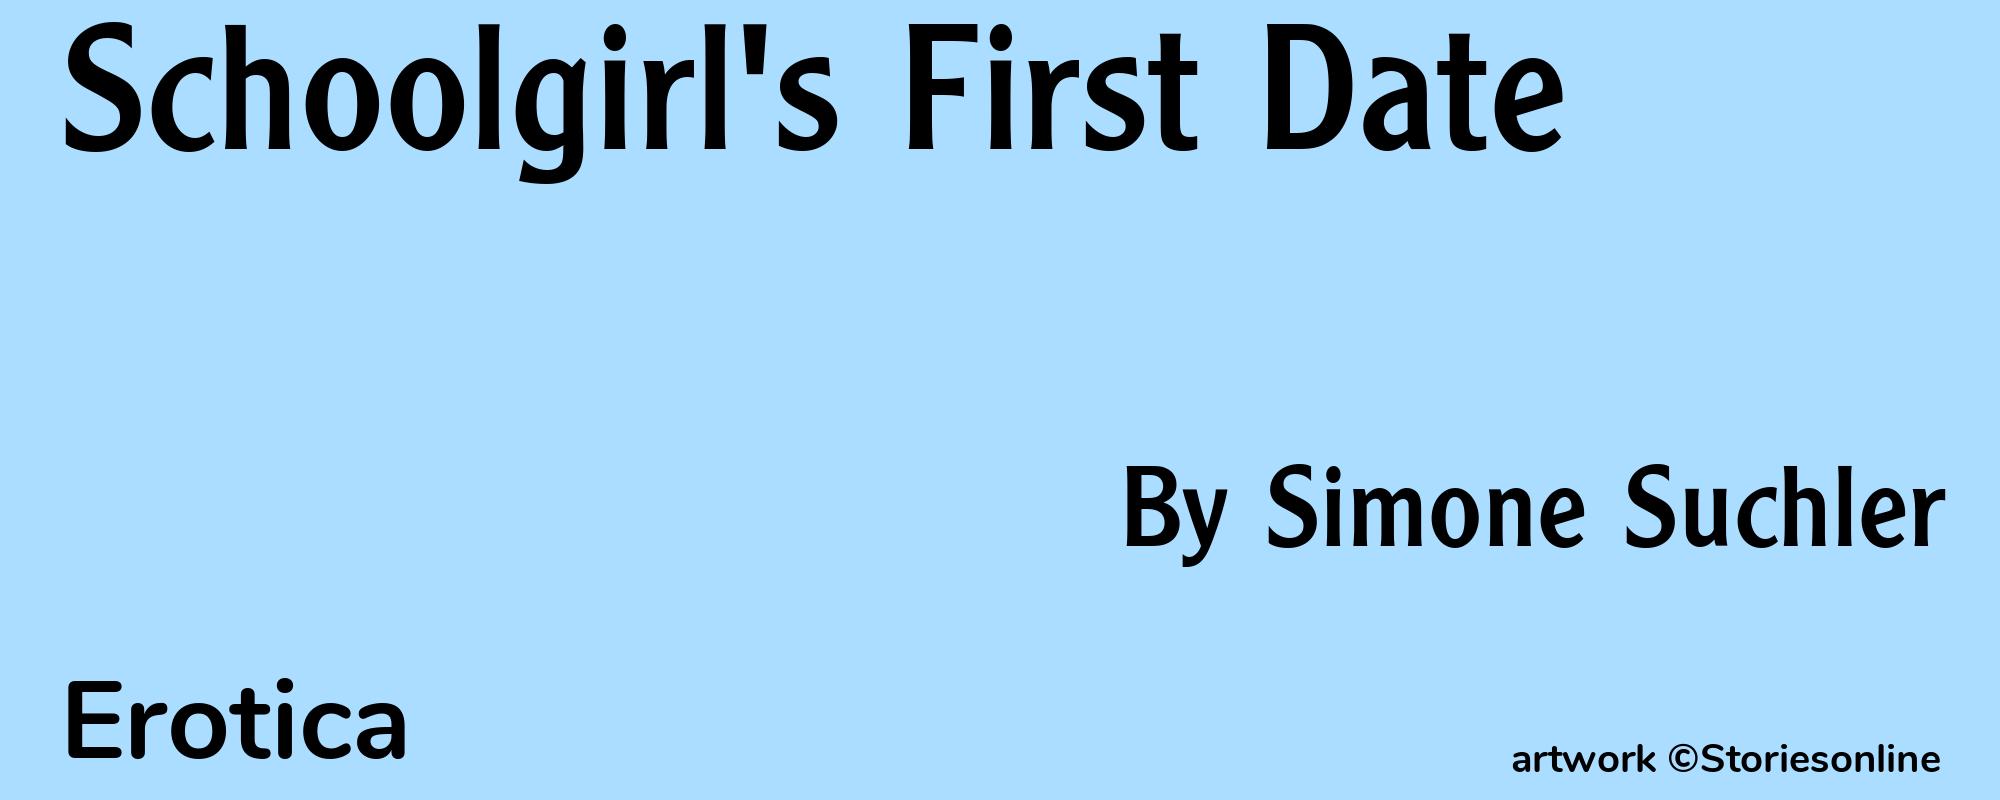 Schoolgirl's First Date - Cover